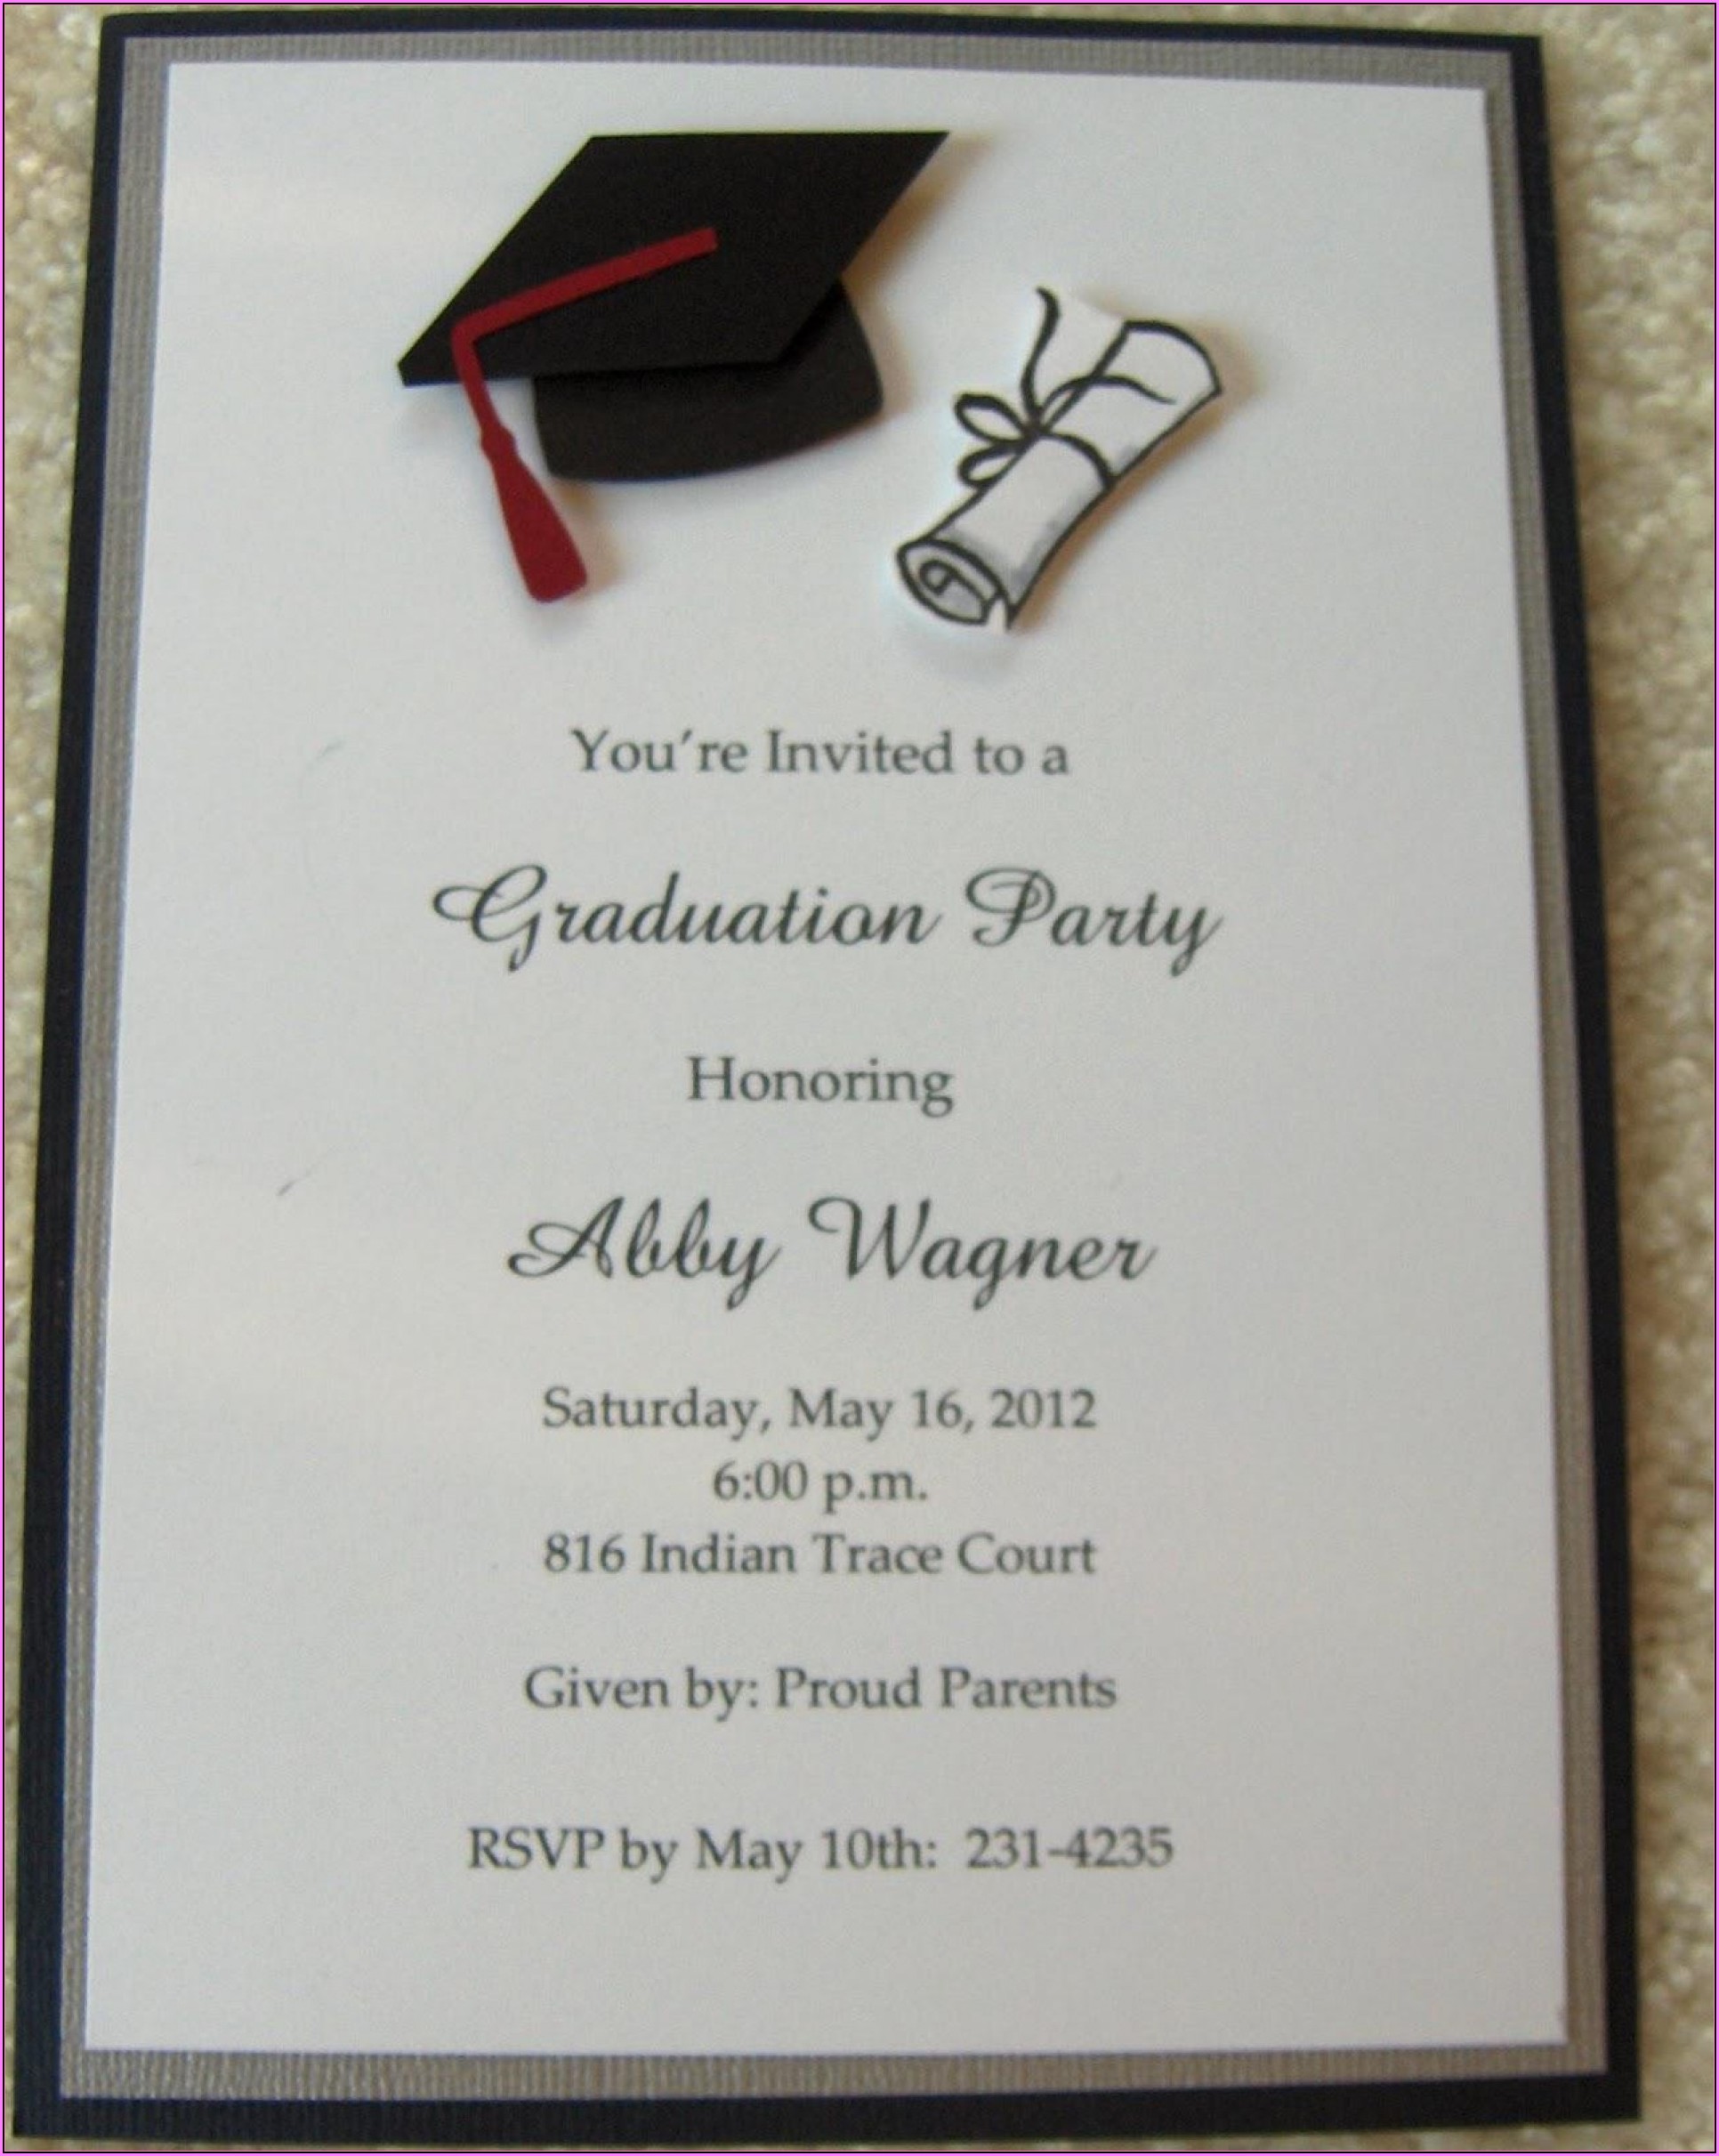 Graduation Party Invitation Templates Free